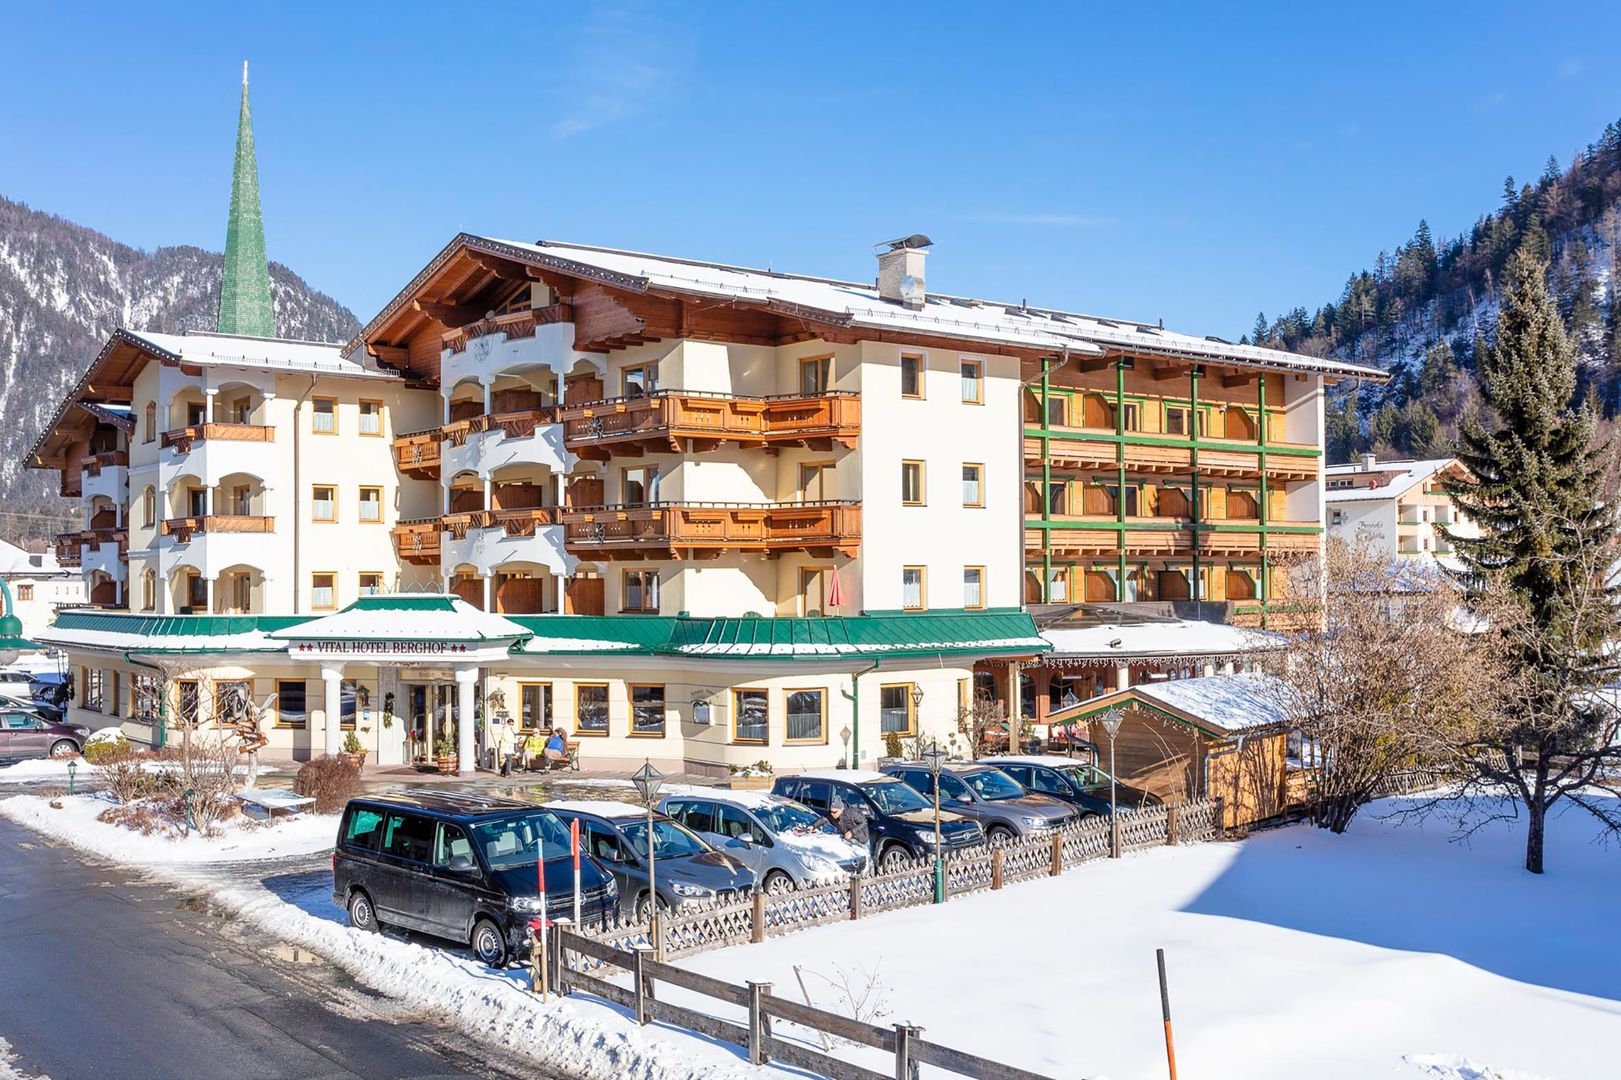 Vital-Hotel Berghof in Kirchdorf in Tirol, Vital-Hotel Berghof / Österreich